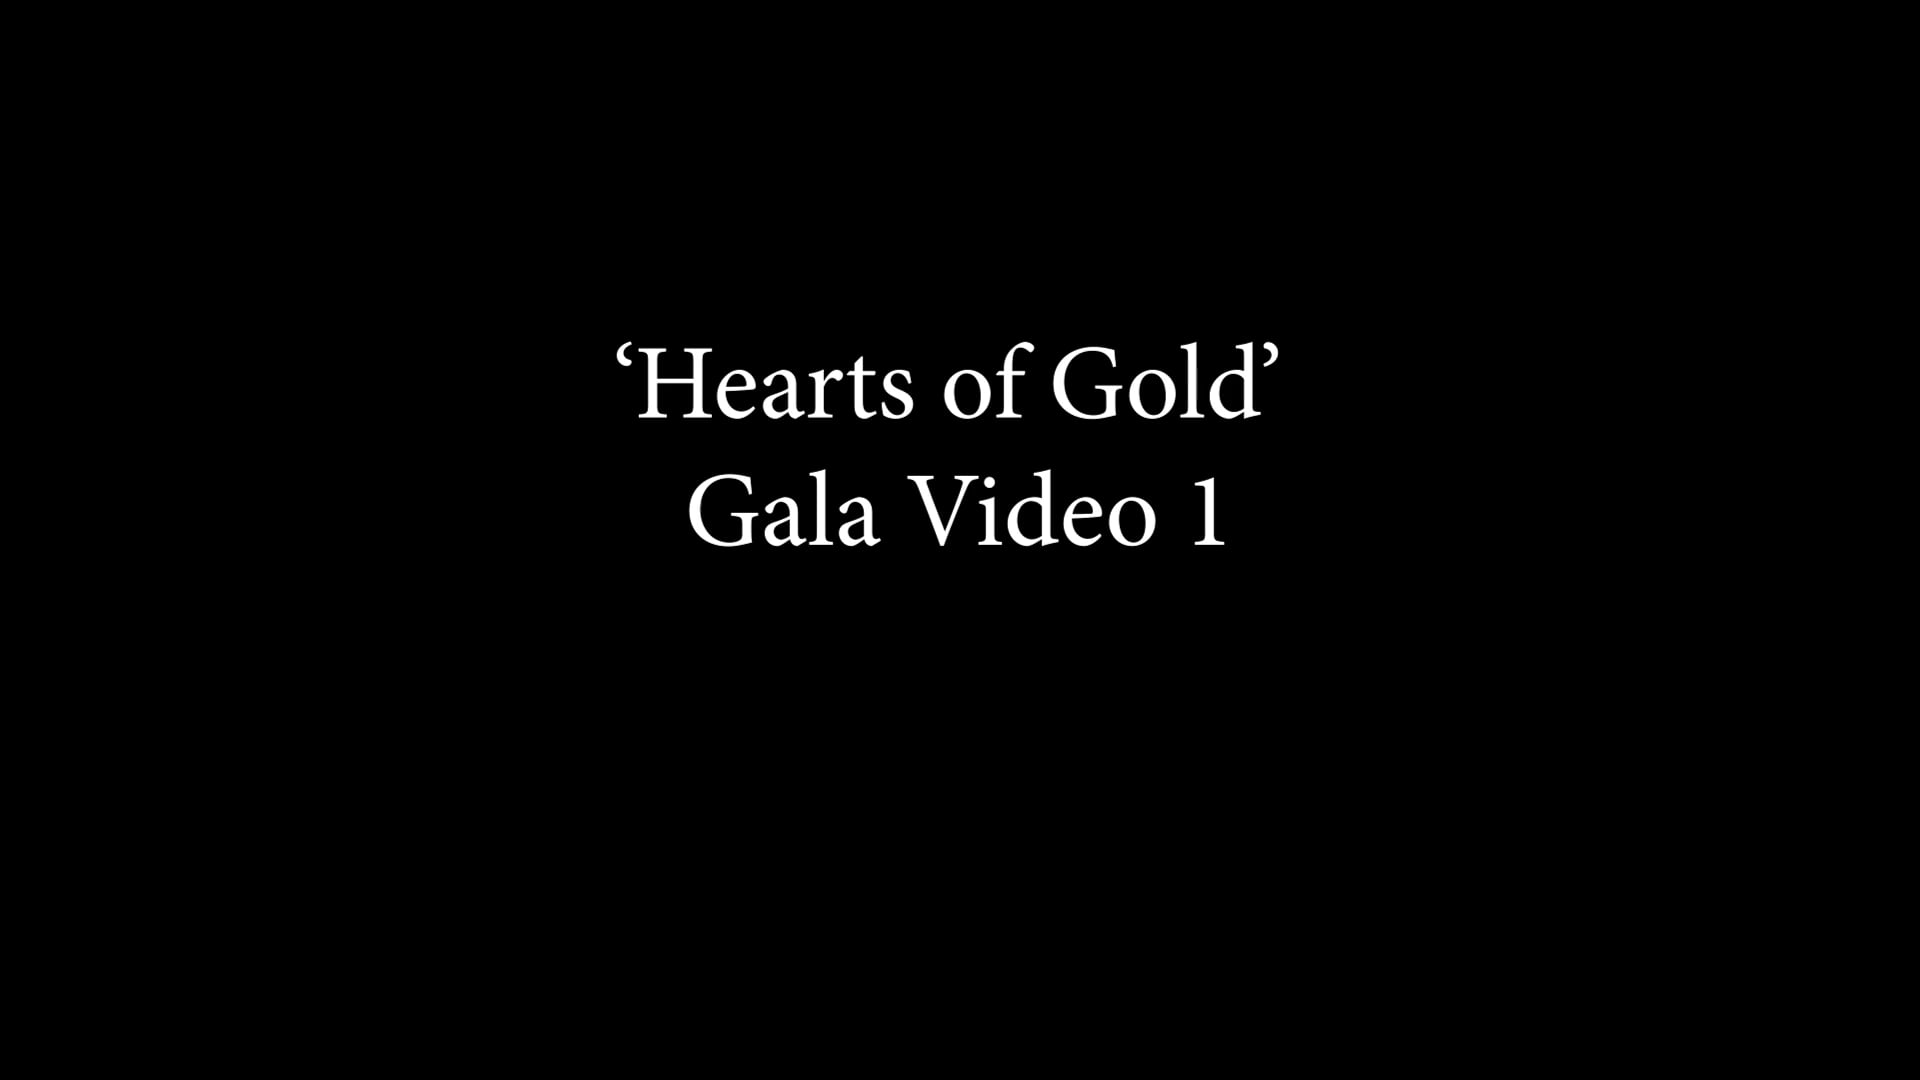 Gala Video 1